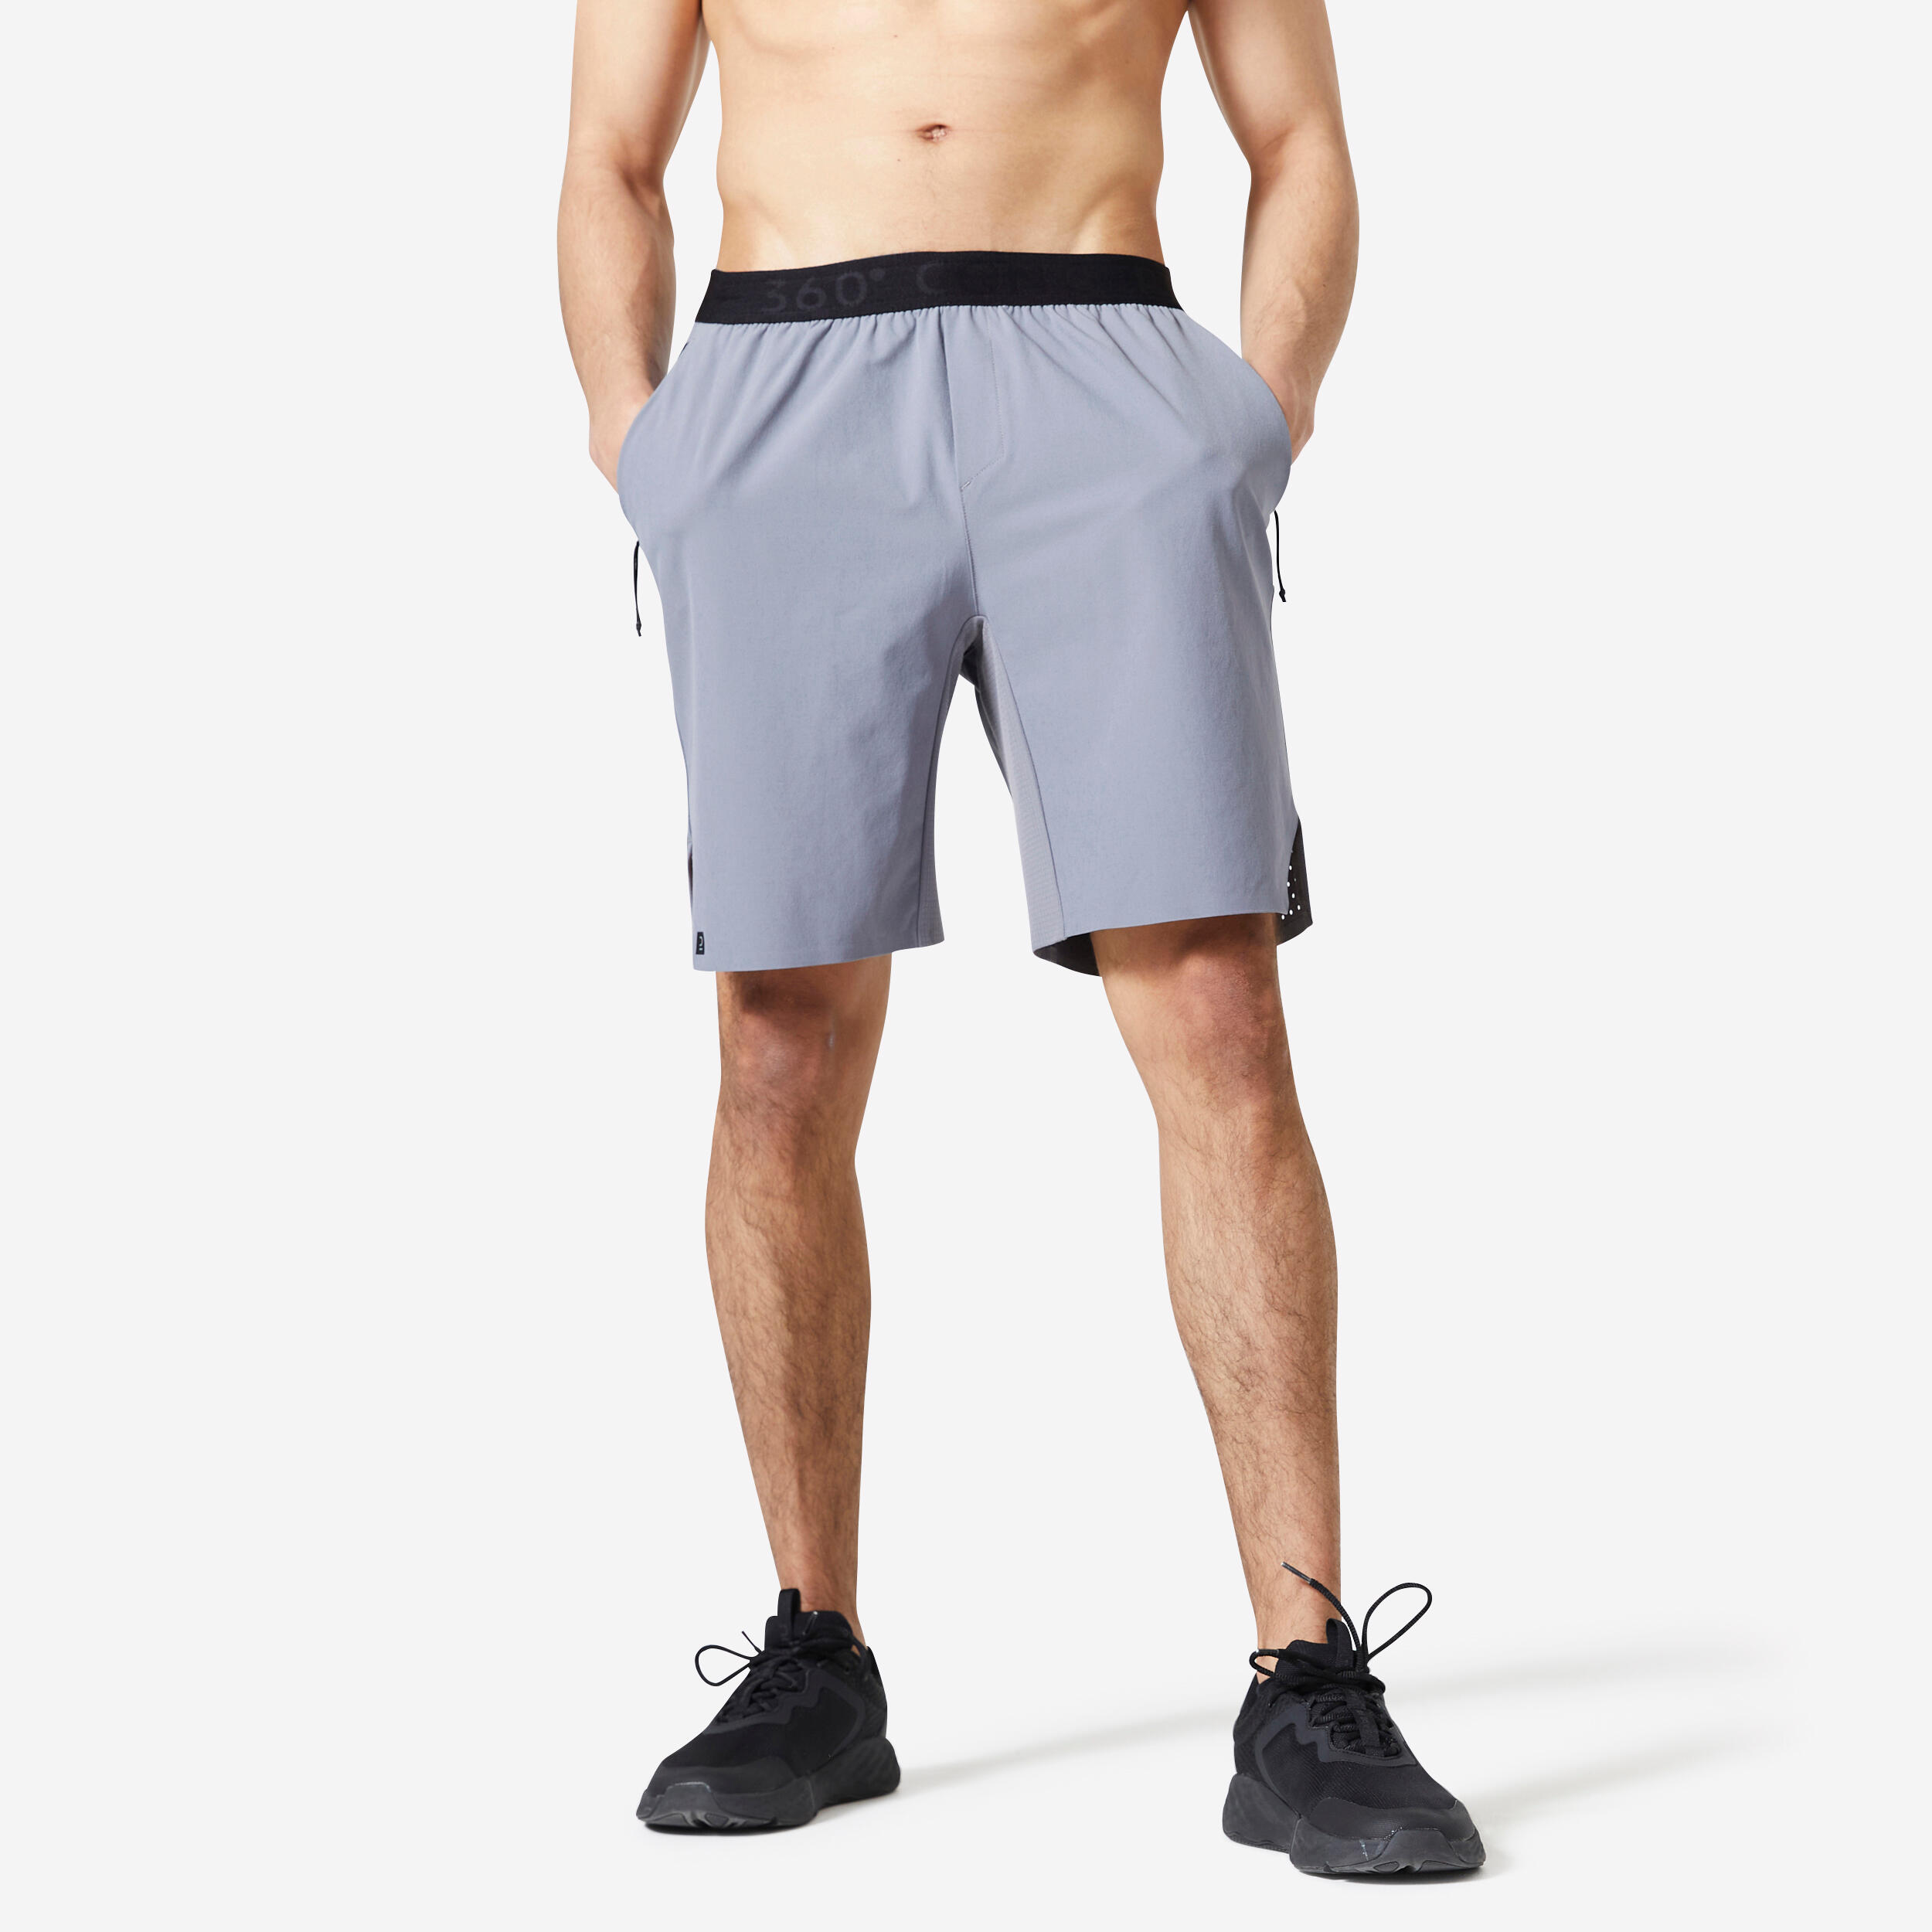 DOMYOS Men's Breathable Performance Cross Training Shorts with Zipped Pockets - Grey